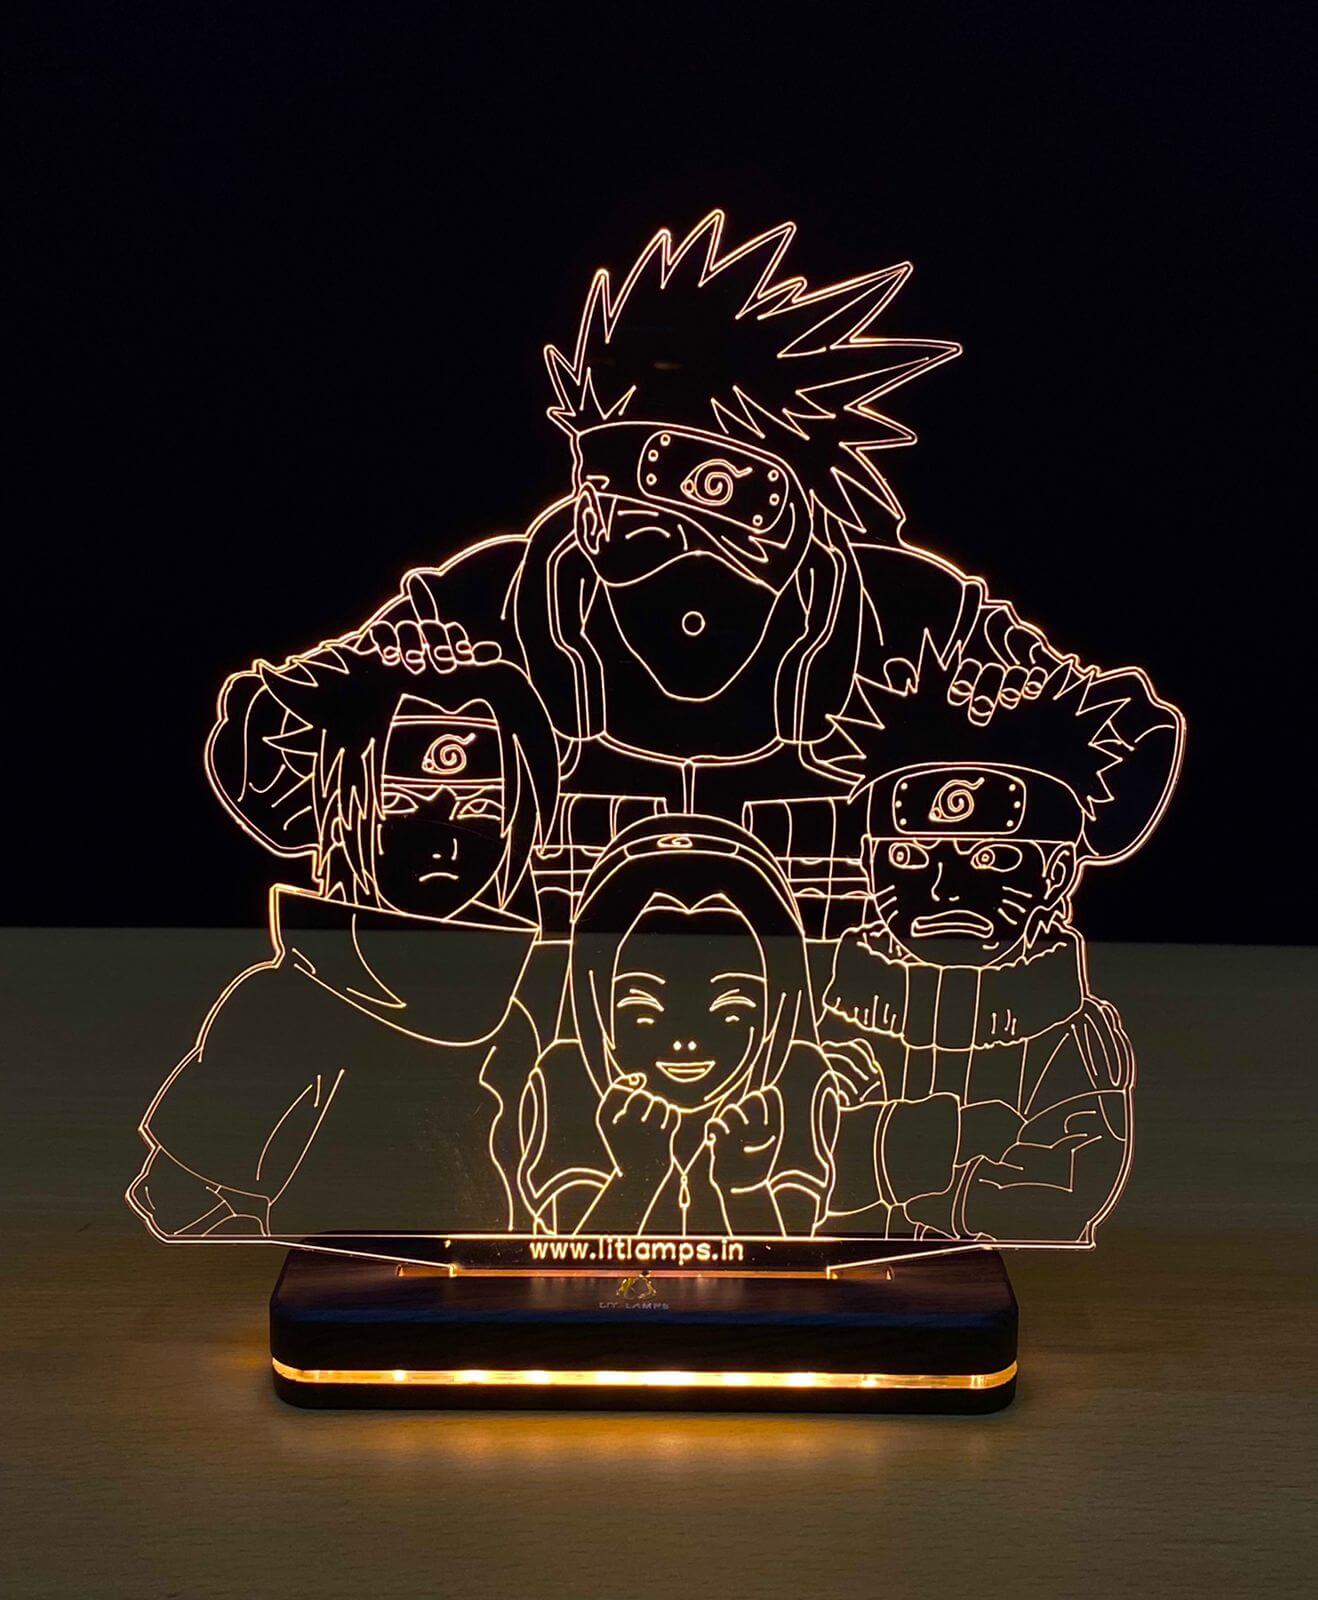 Naruto Team 07 Anime Decor Aesthetic 3D Illusion Lamp by LIT Lamps - LIT Lamps - Naruto Team 07 3D LED Lamp-3d Lamps